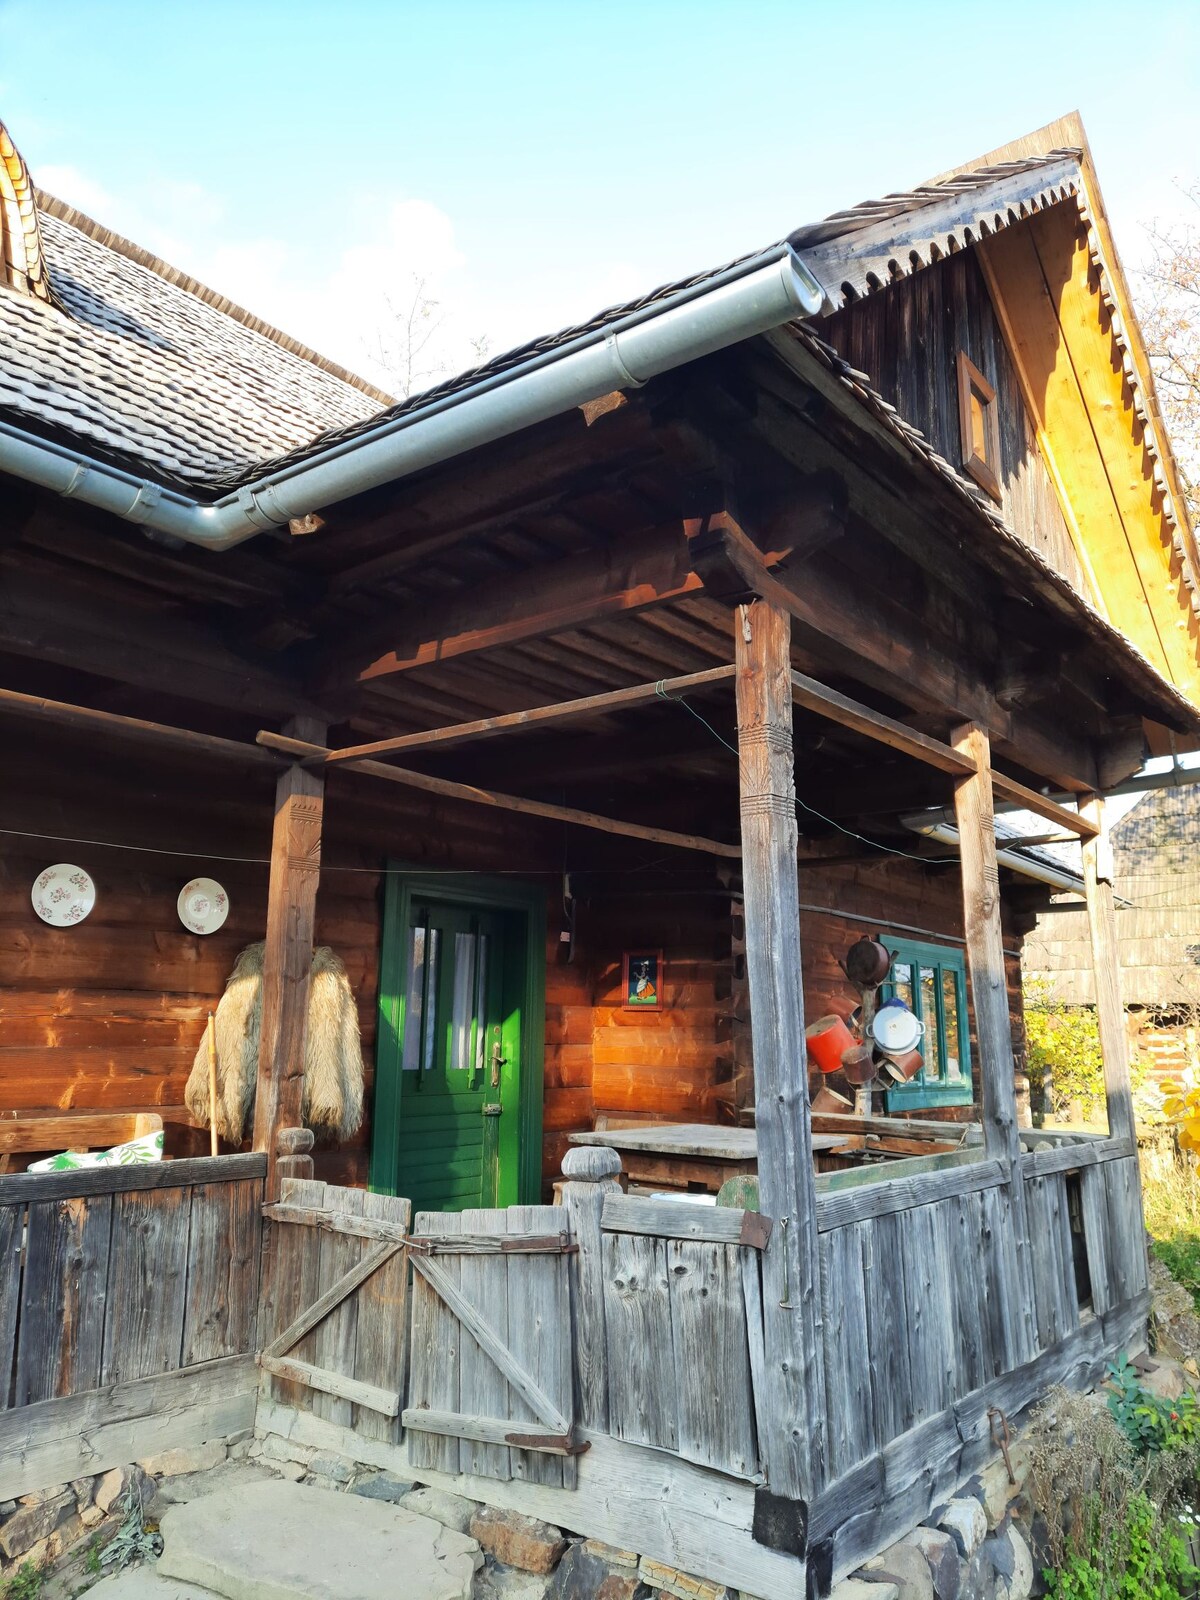 Gezellige traditionele houten woning